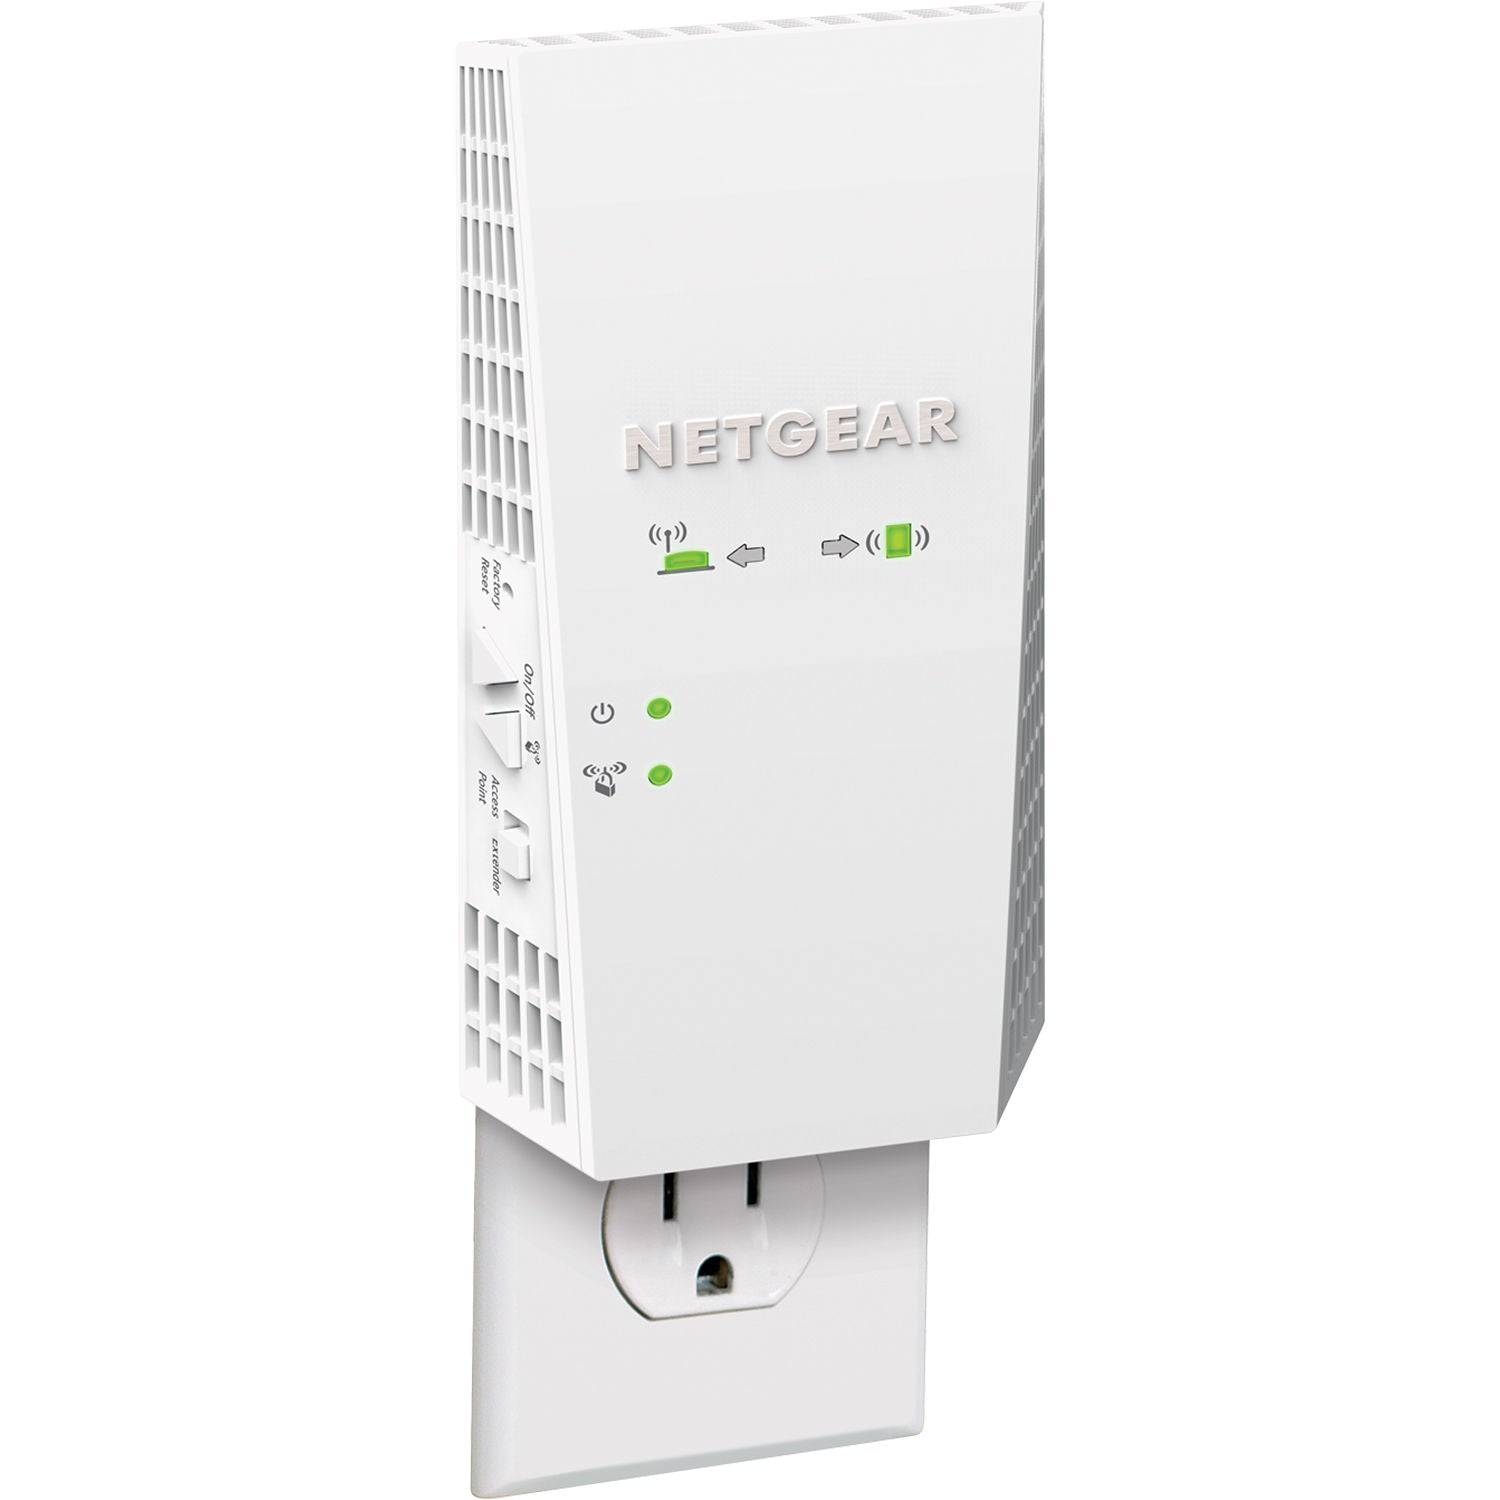 NETGEAR EX7300-100NAR AC2200 Mesh WiFi Extender - Certified Refurbished